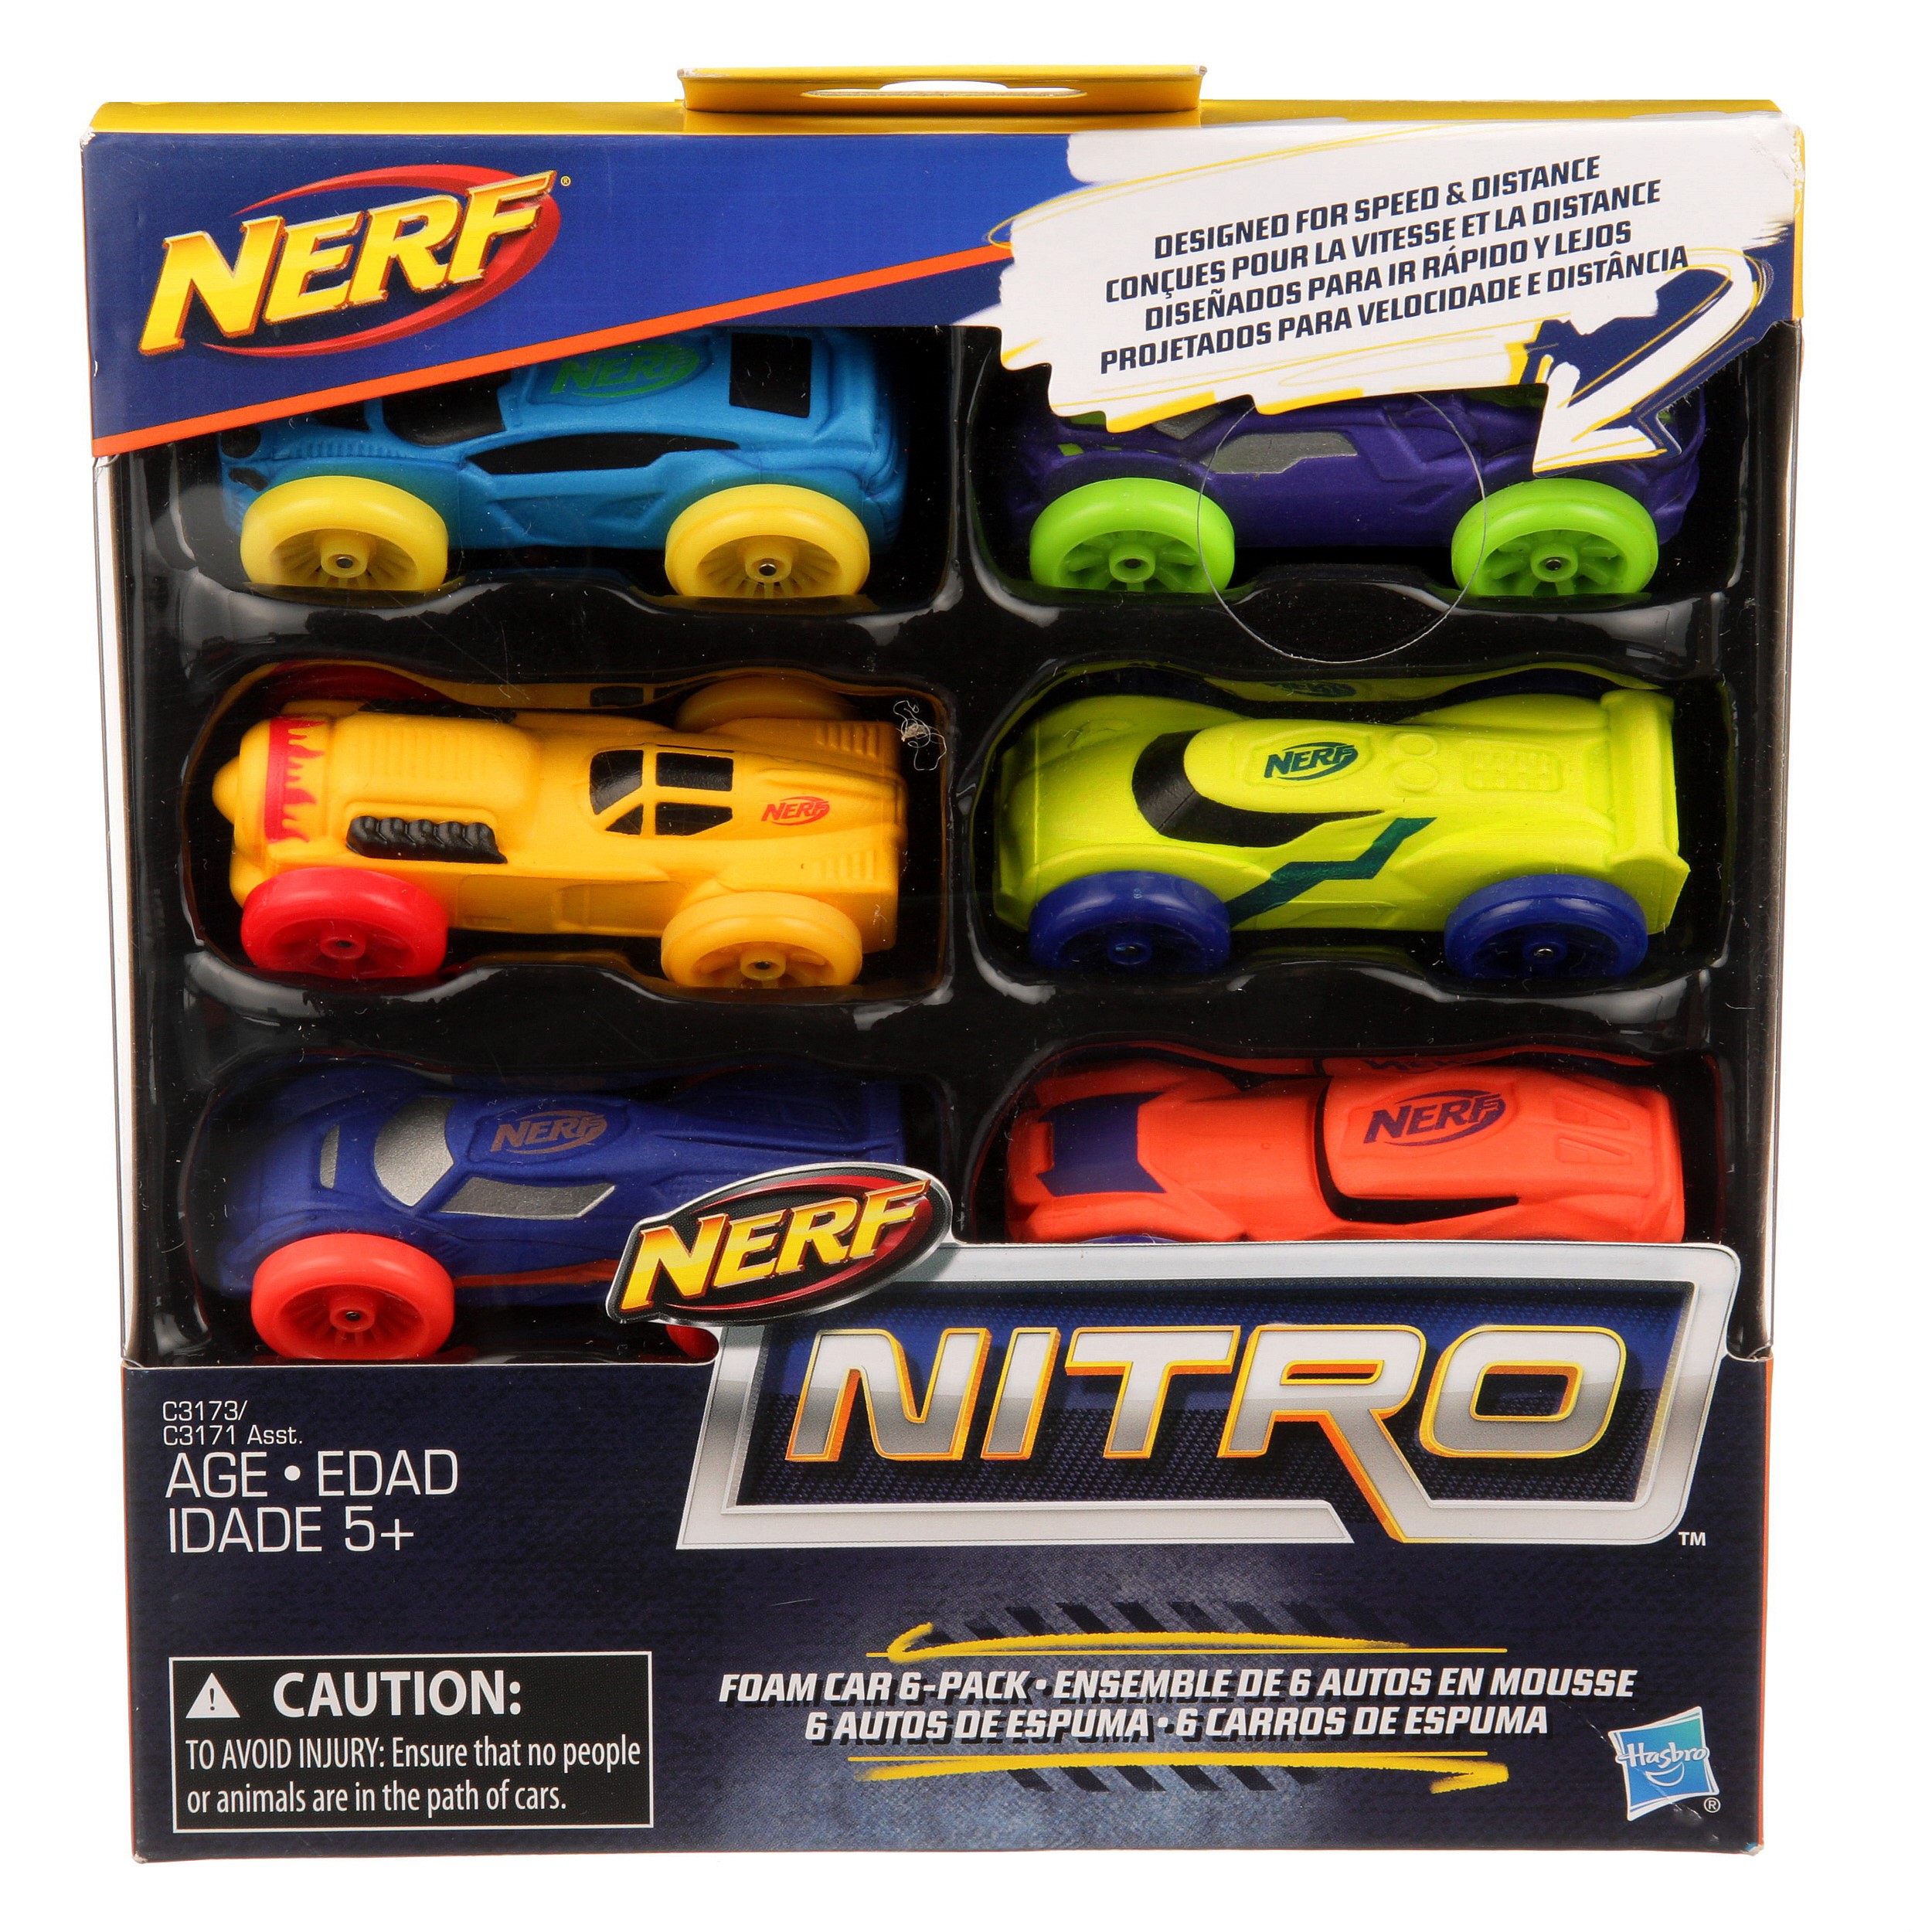 Nerf Nitro Foam Car 6-Pack (Version 2) - image 6 of 6